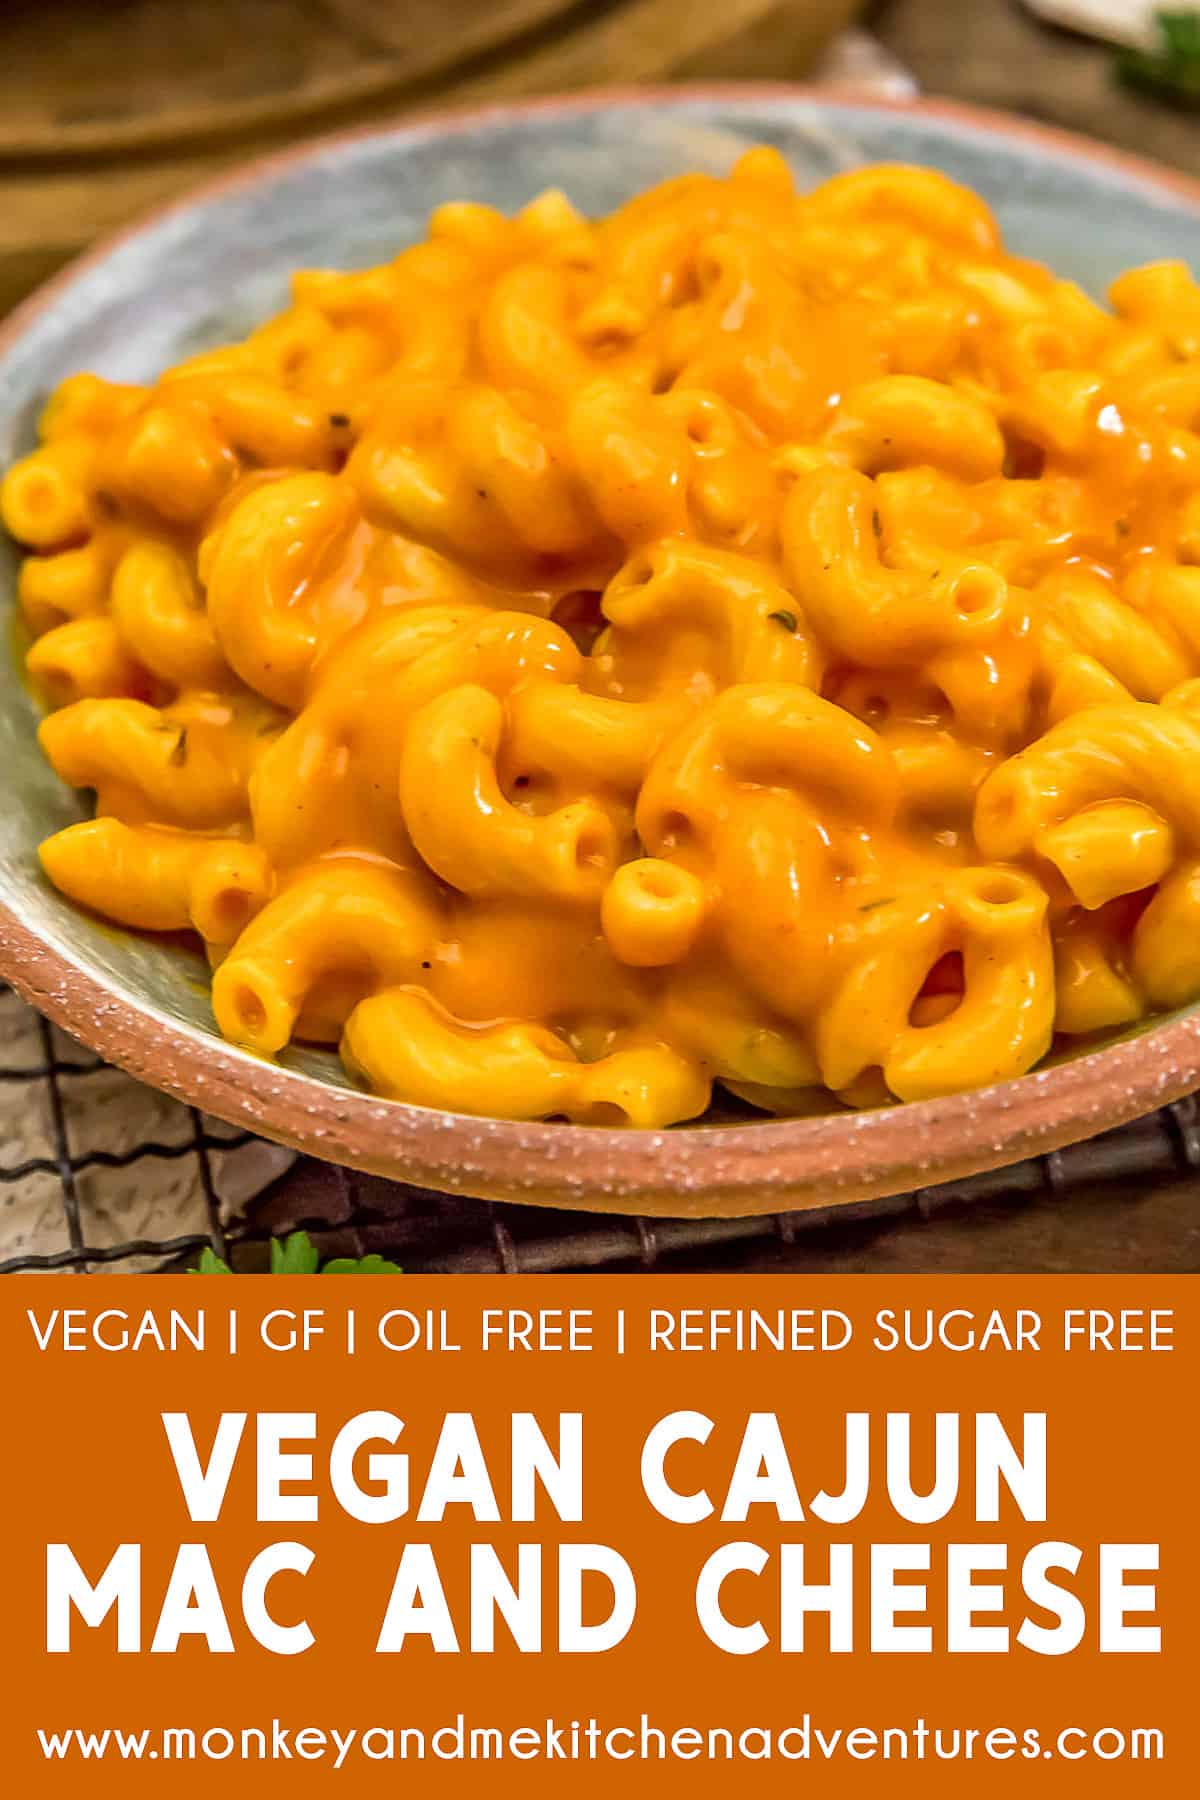 Vegan Cajun Mac and Cheese with text description